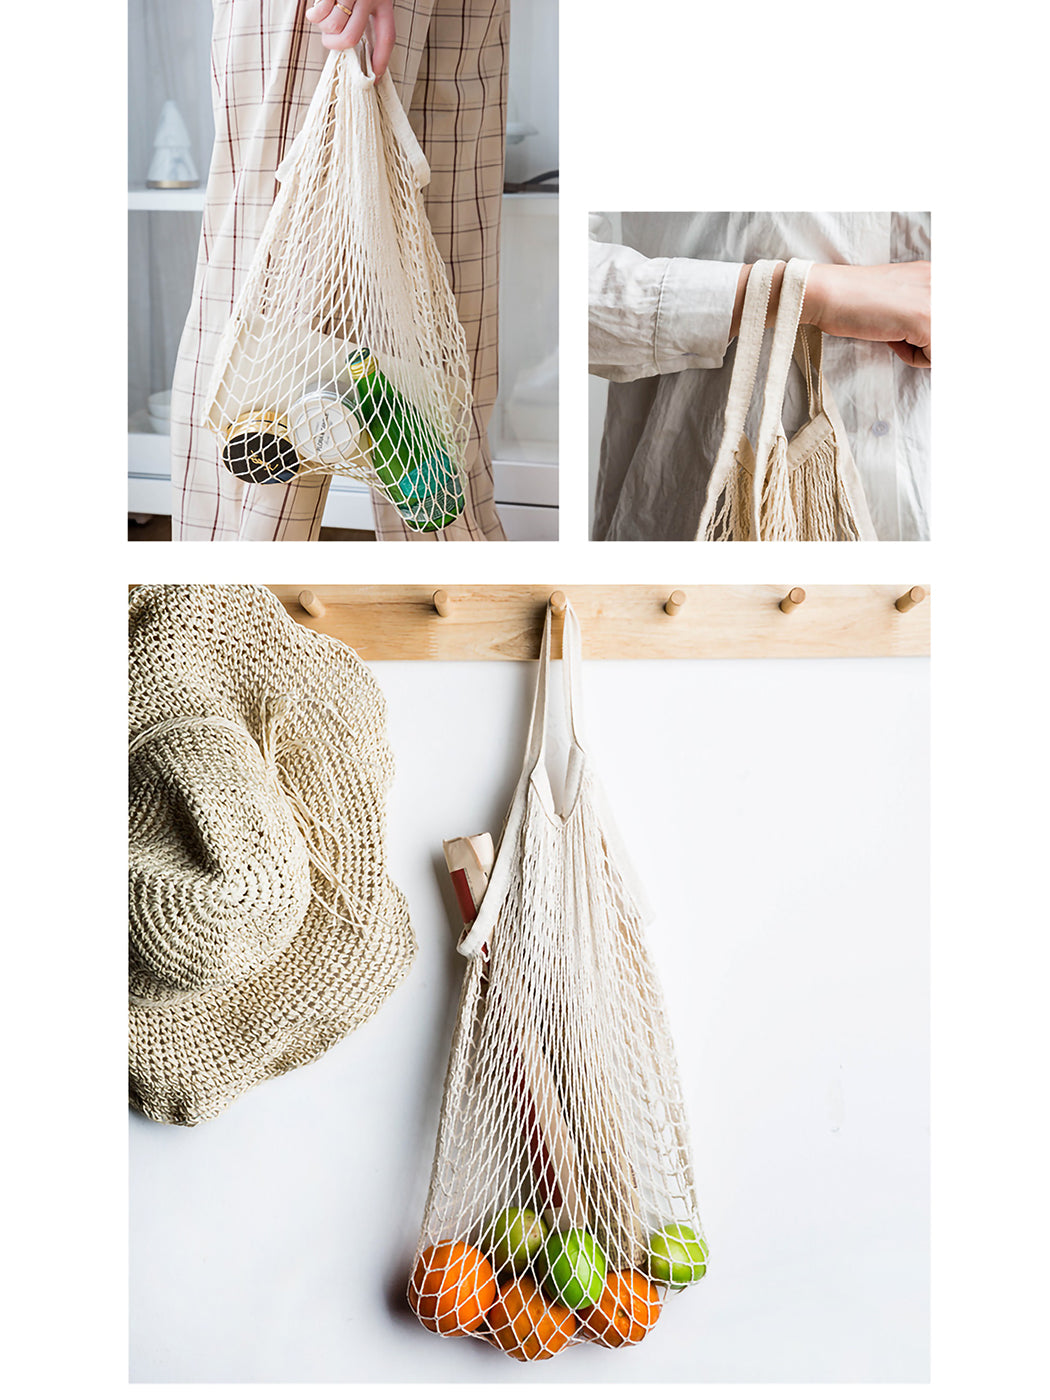 Reusable Washable Cotton Net Shopping Tote Bag